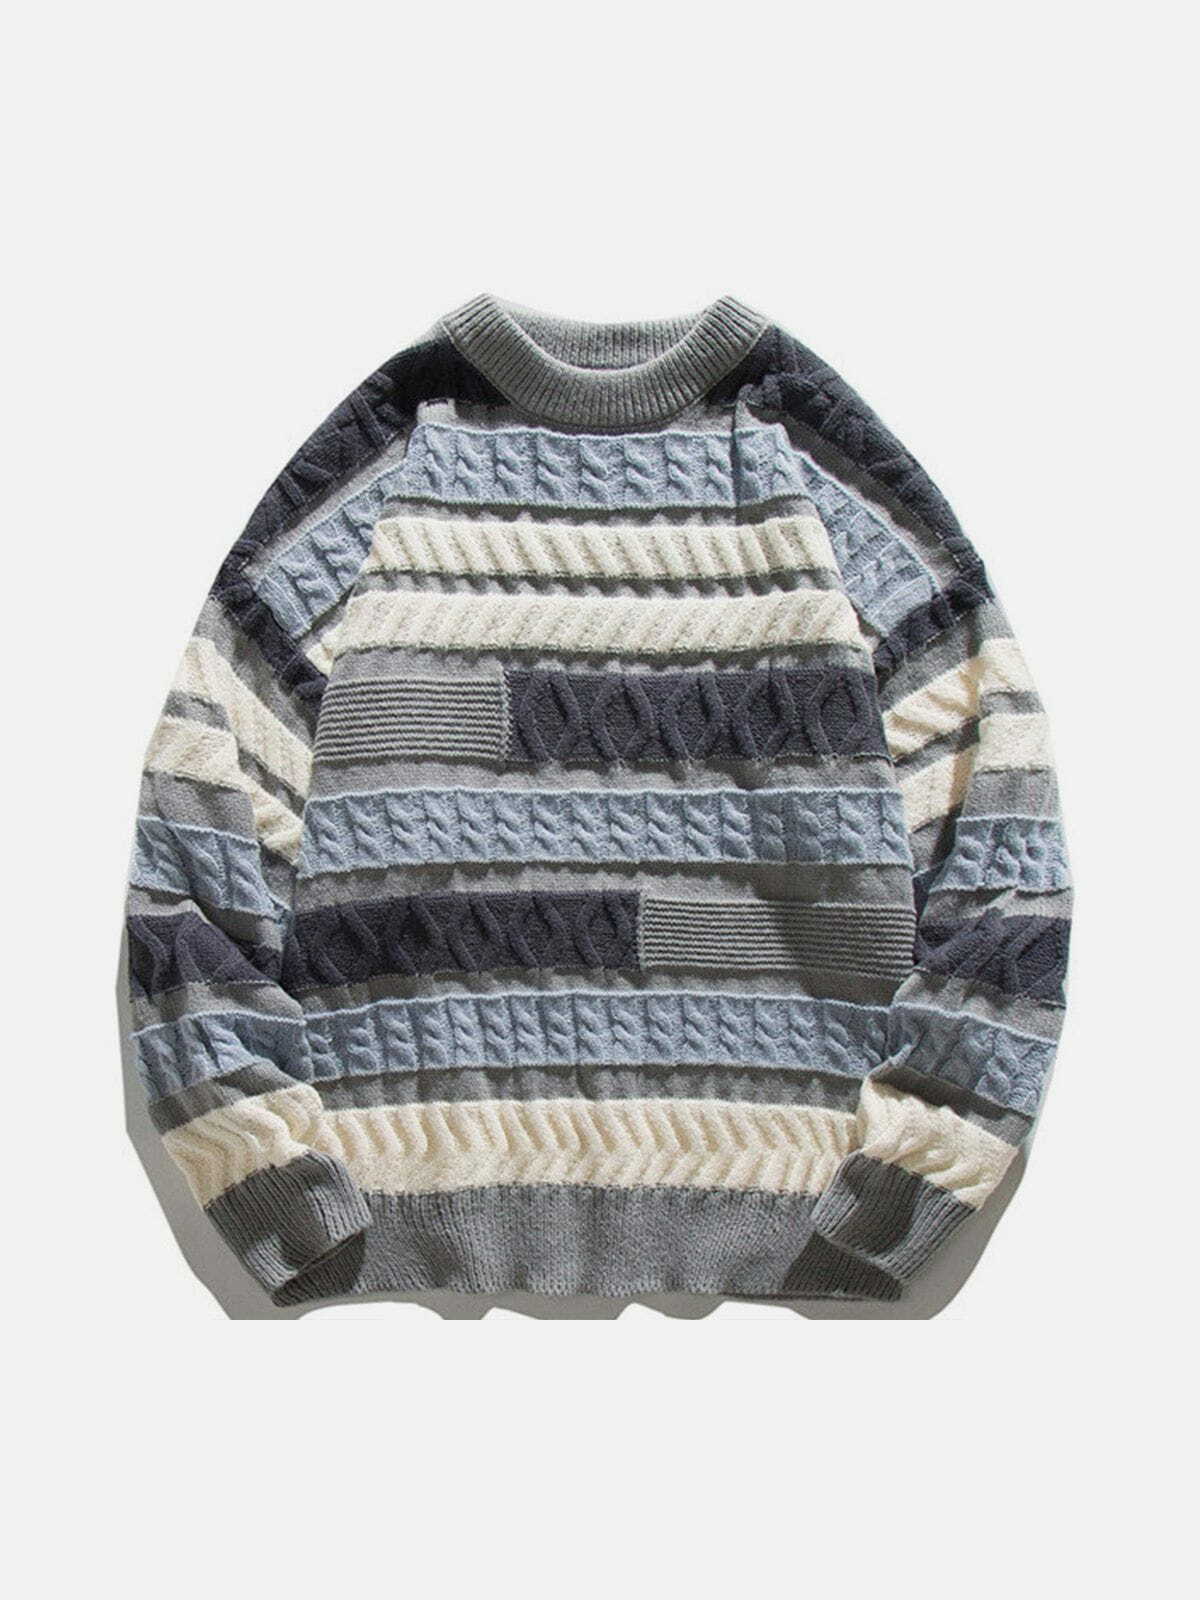 soft knit sweater retro chic statement piece 4330